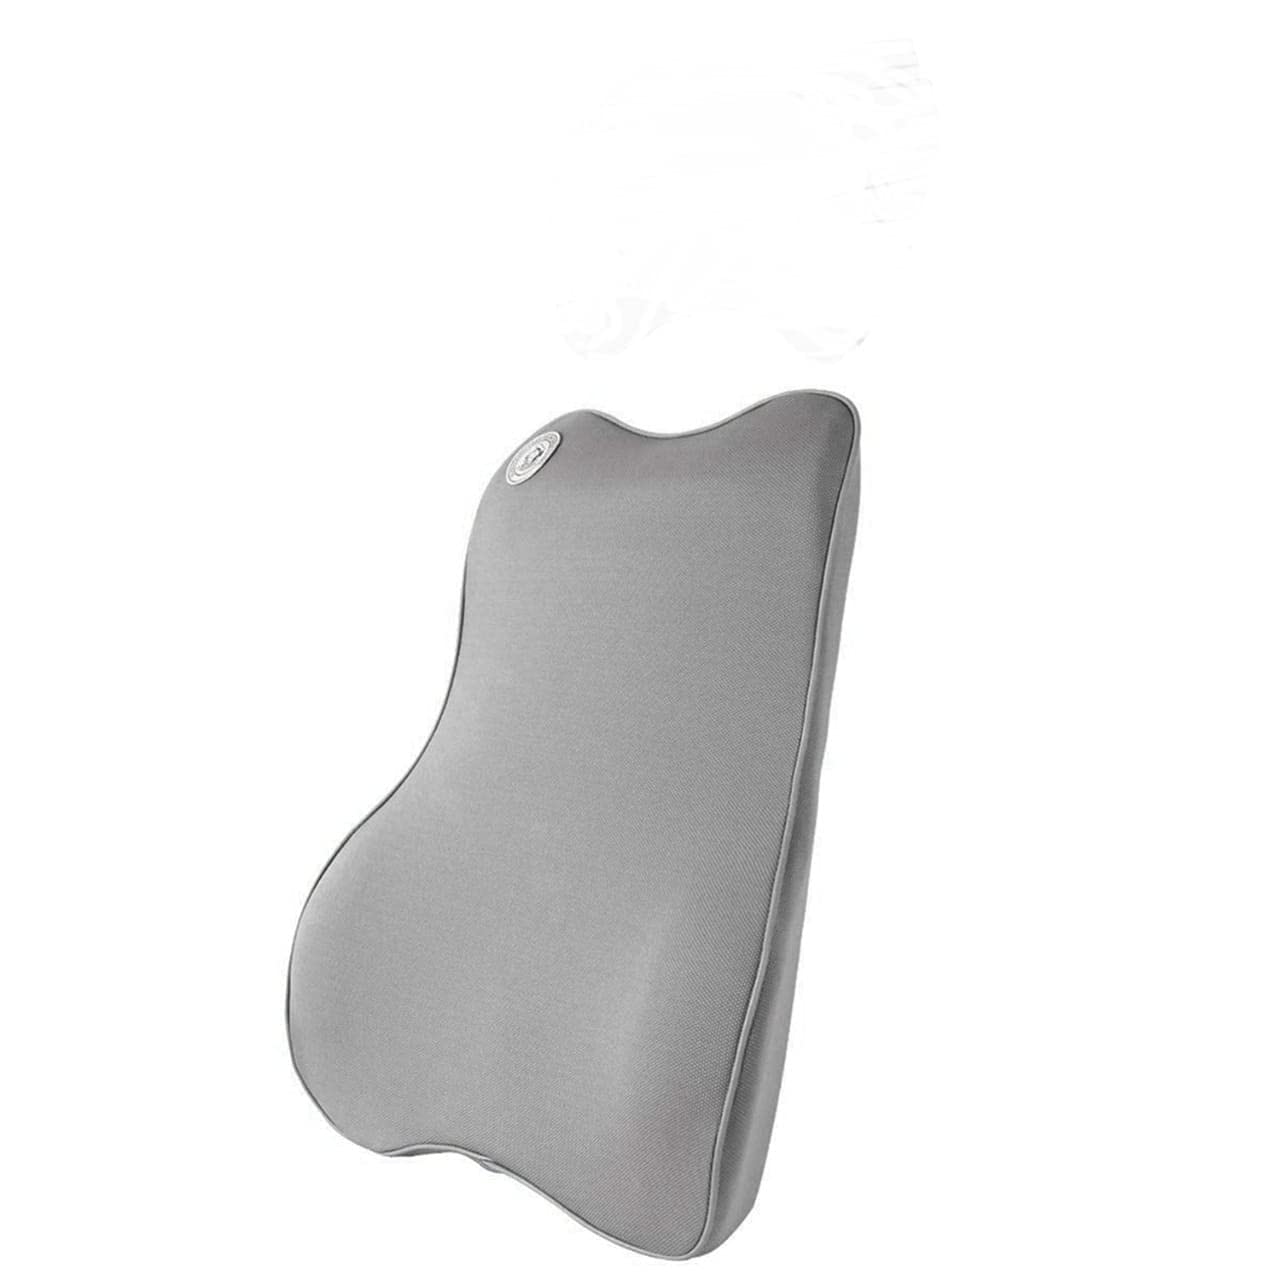 Car Seat Lumbar Pillow in Grey Adjust Sitting Position Relief Pain